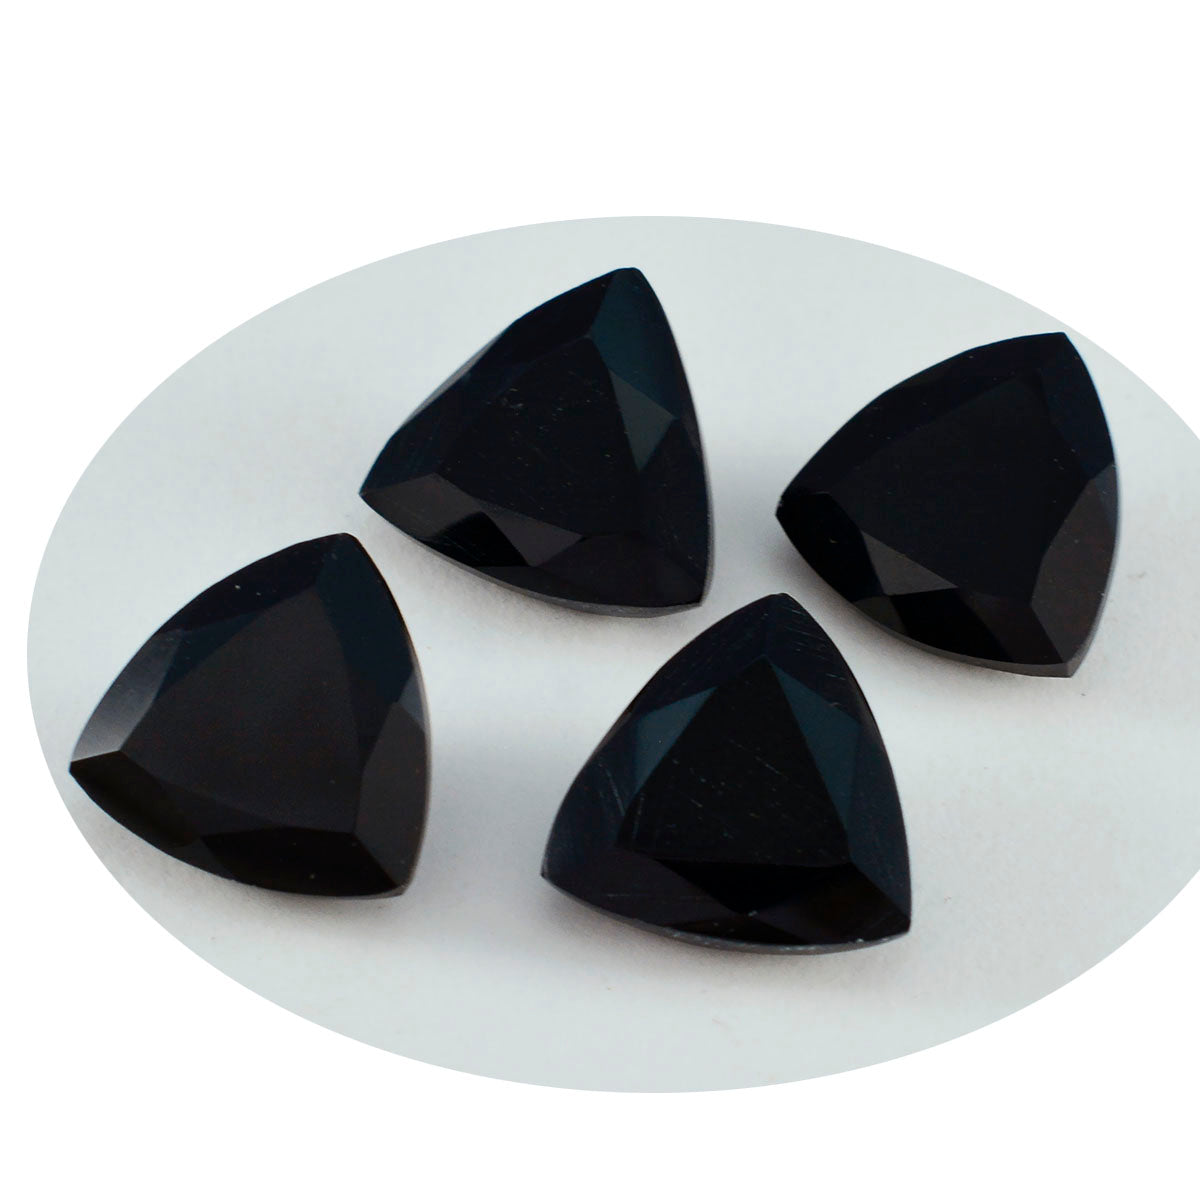 Riyogems 1PC Natural Black Onyx Faceted 13x13 mm Trillion Shape good-looking Quality Gem